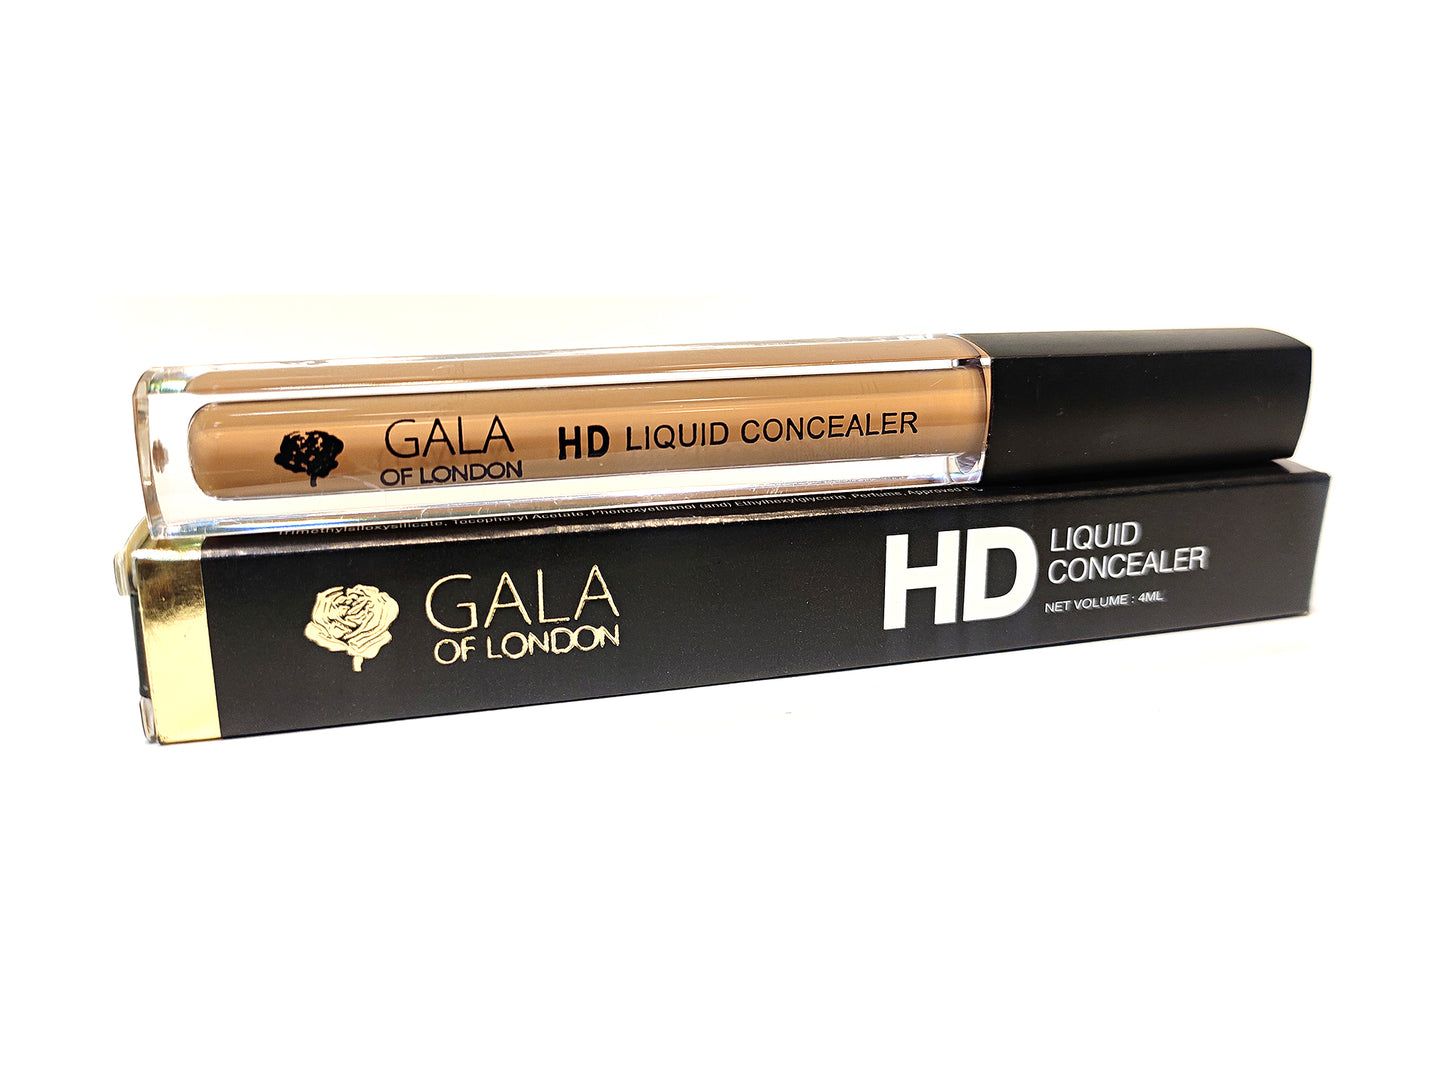 Gala of London HD Liquid Concealer - 02 Caramel